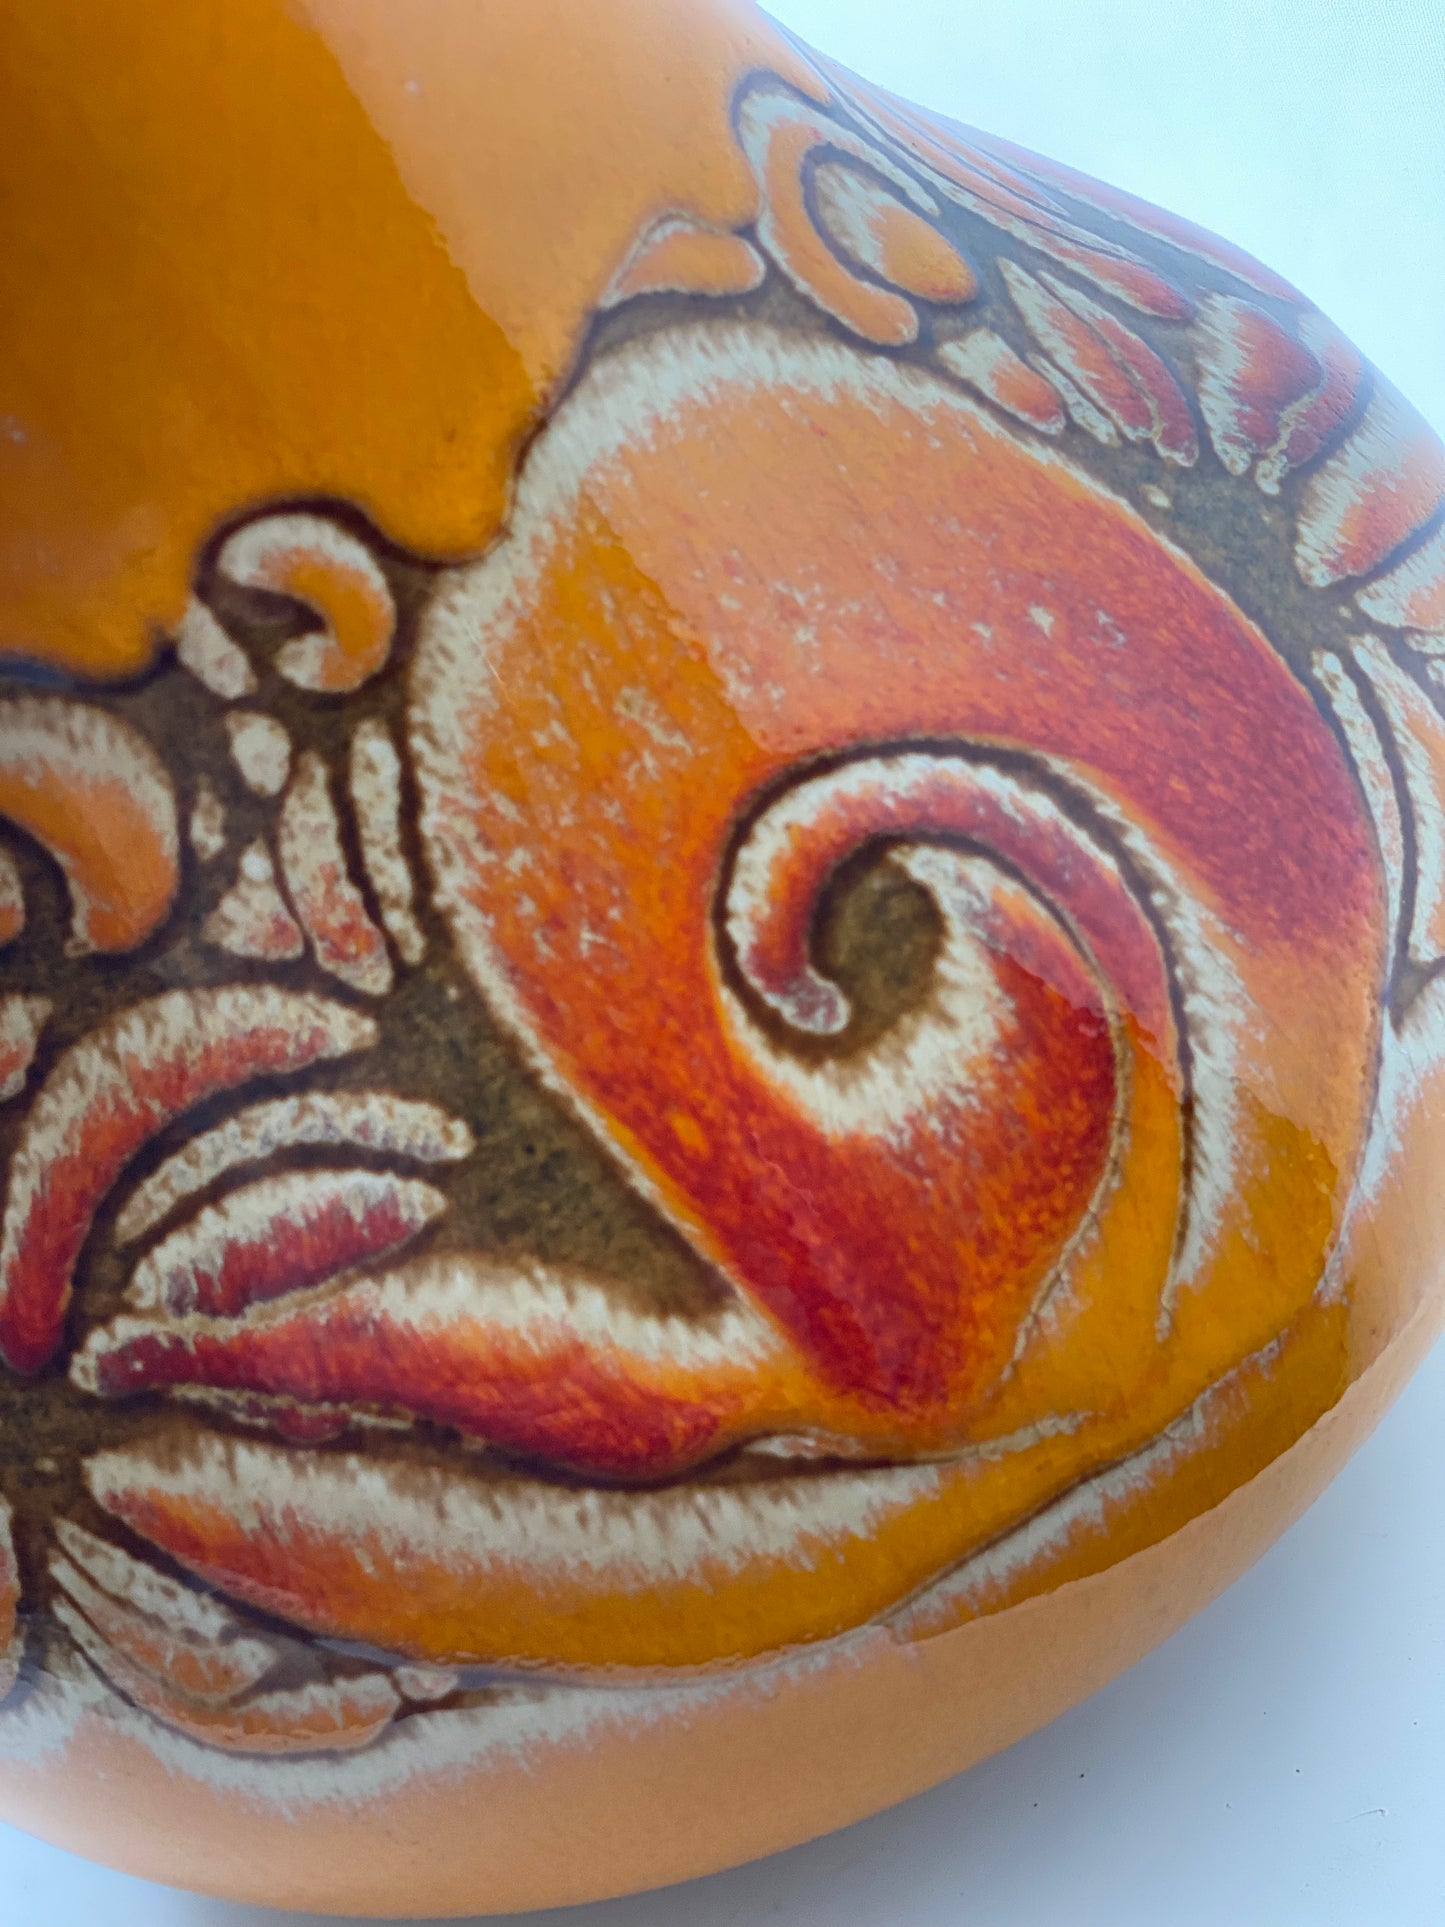 Poole Pottery Ceramics Studio Lamp with Delphis-Style Decoration on Yellow Orange Ground.